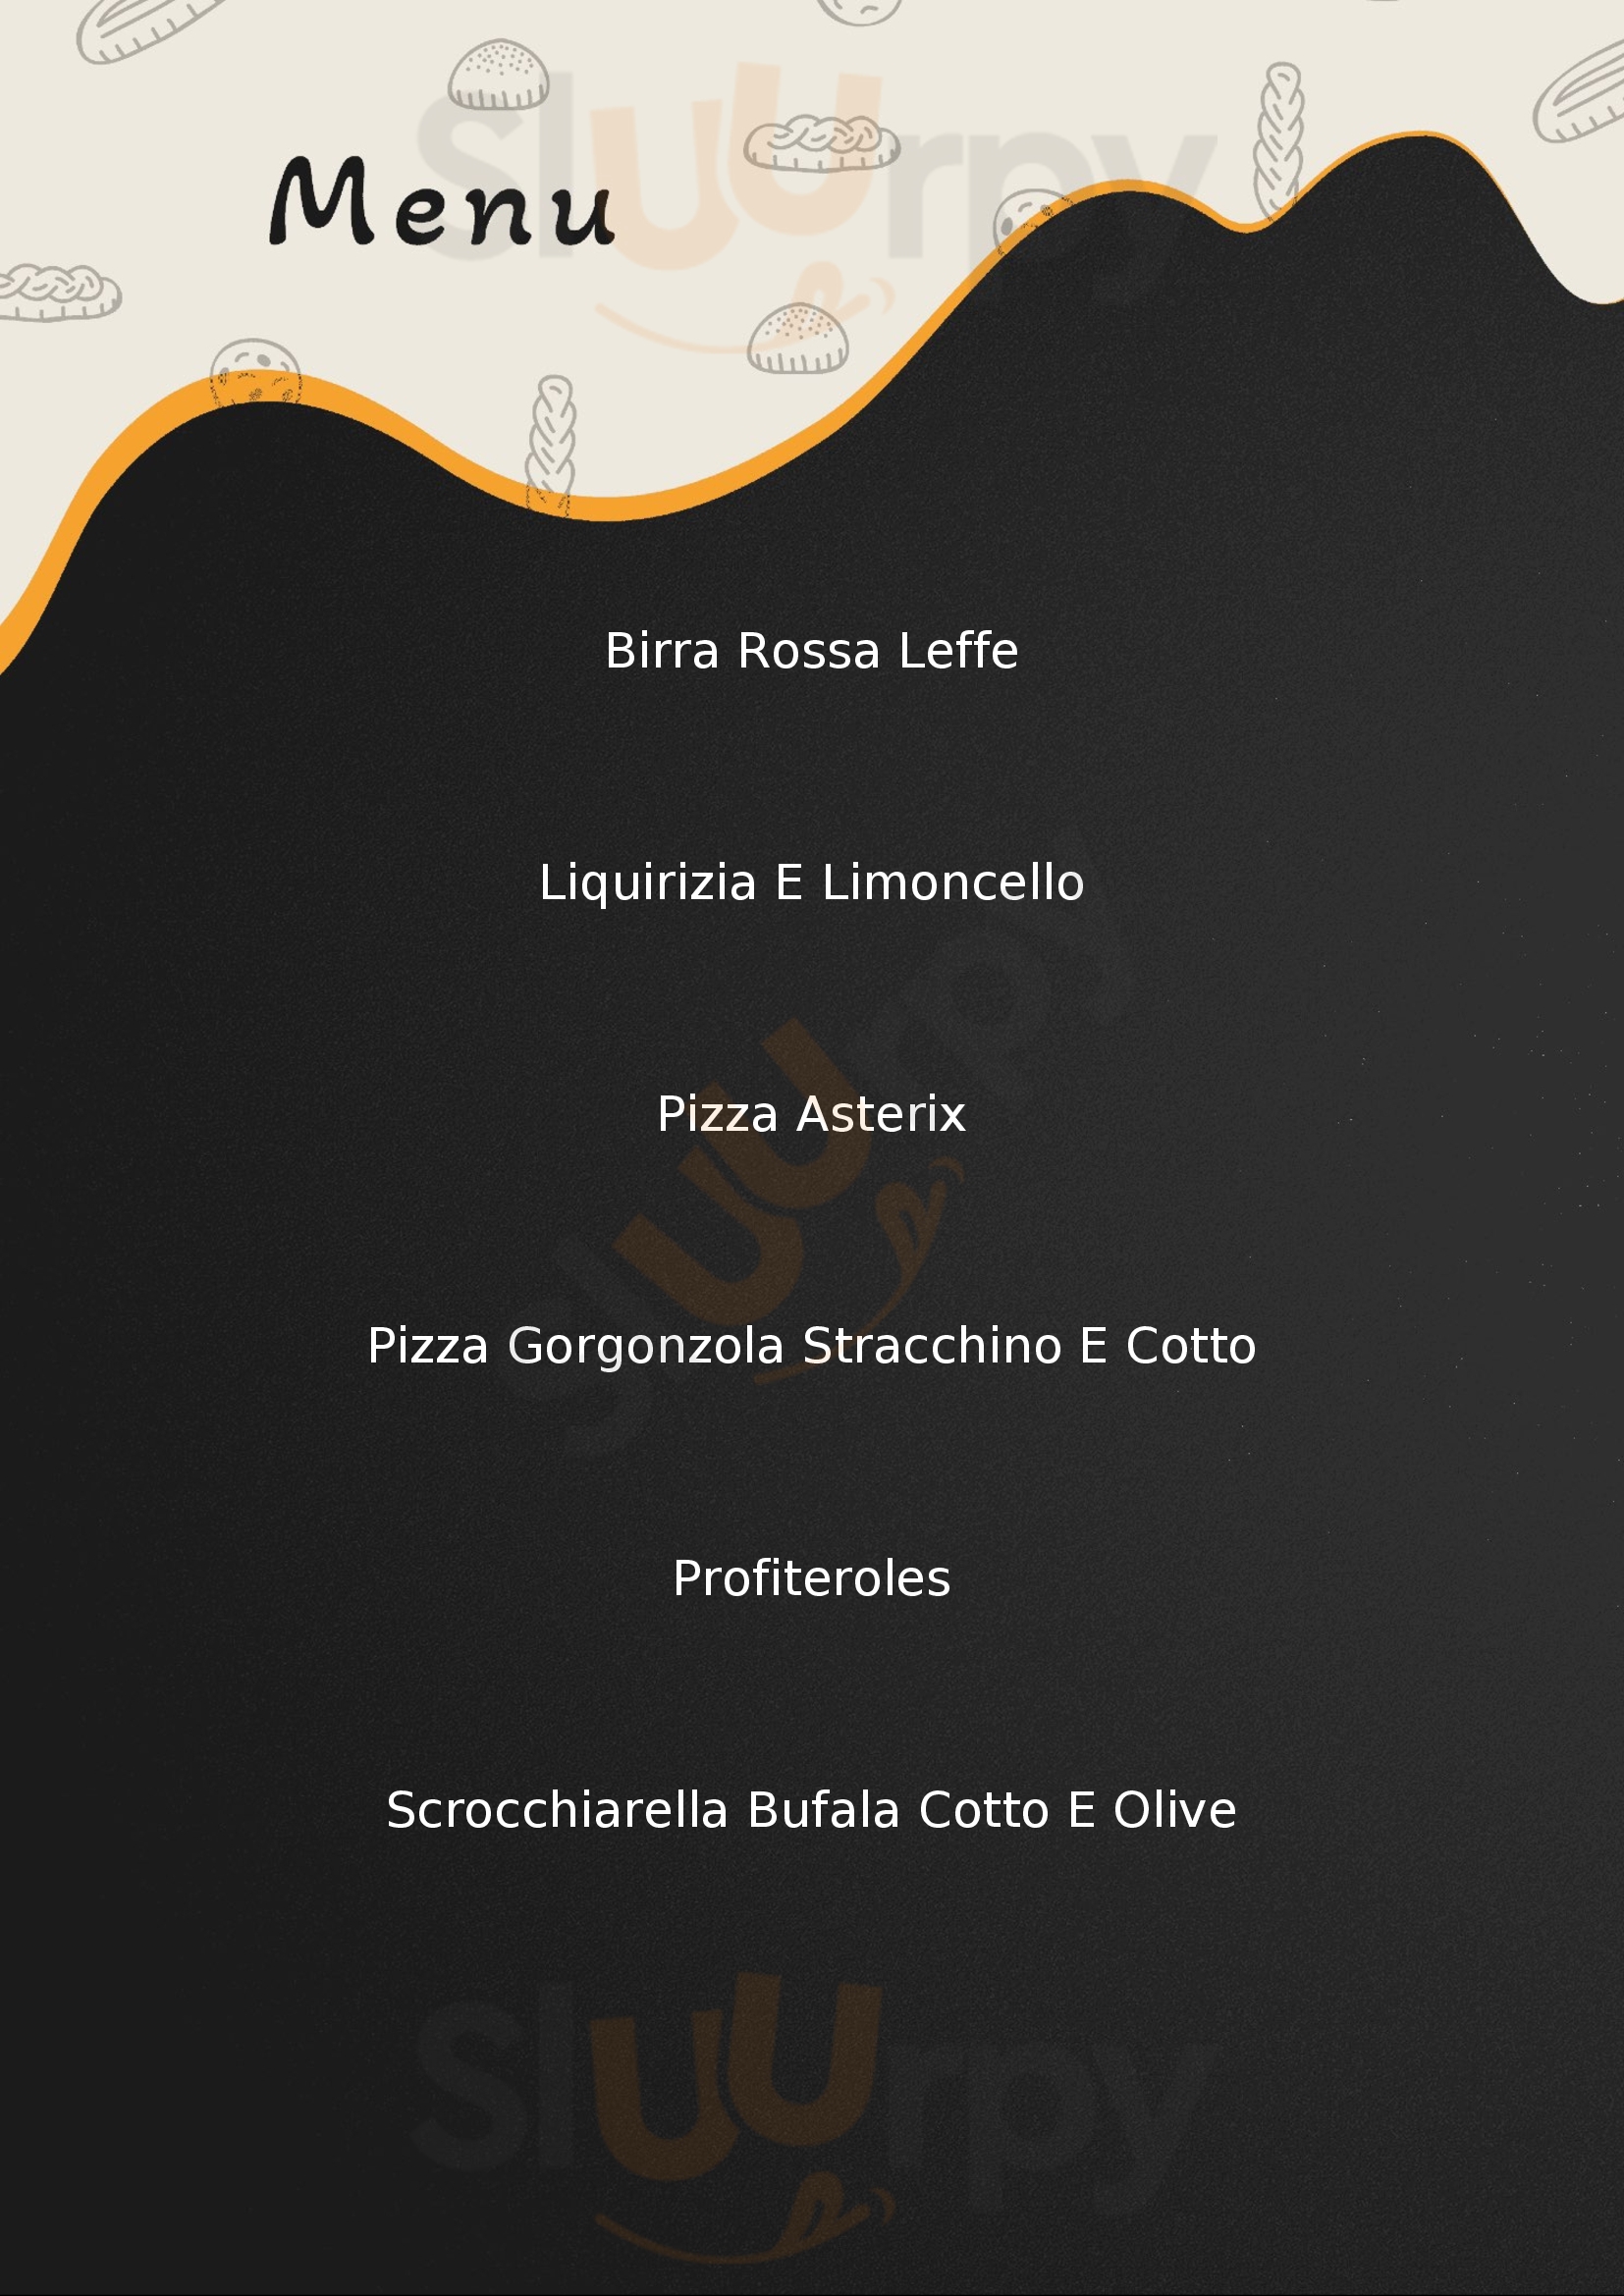 Planet Pizza Albenga menù 1 pagina